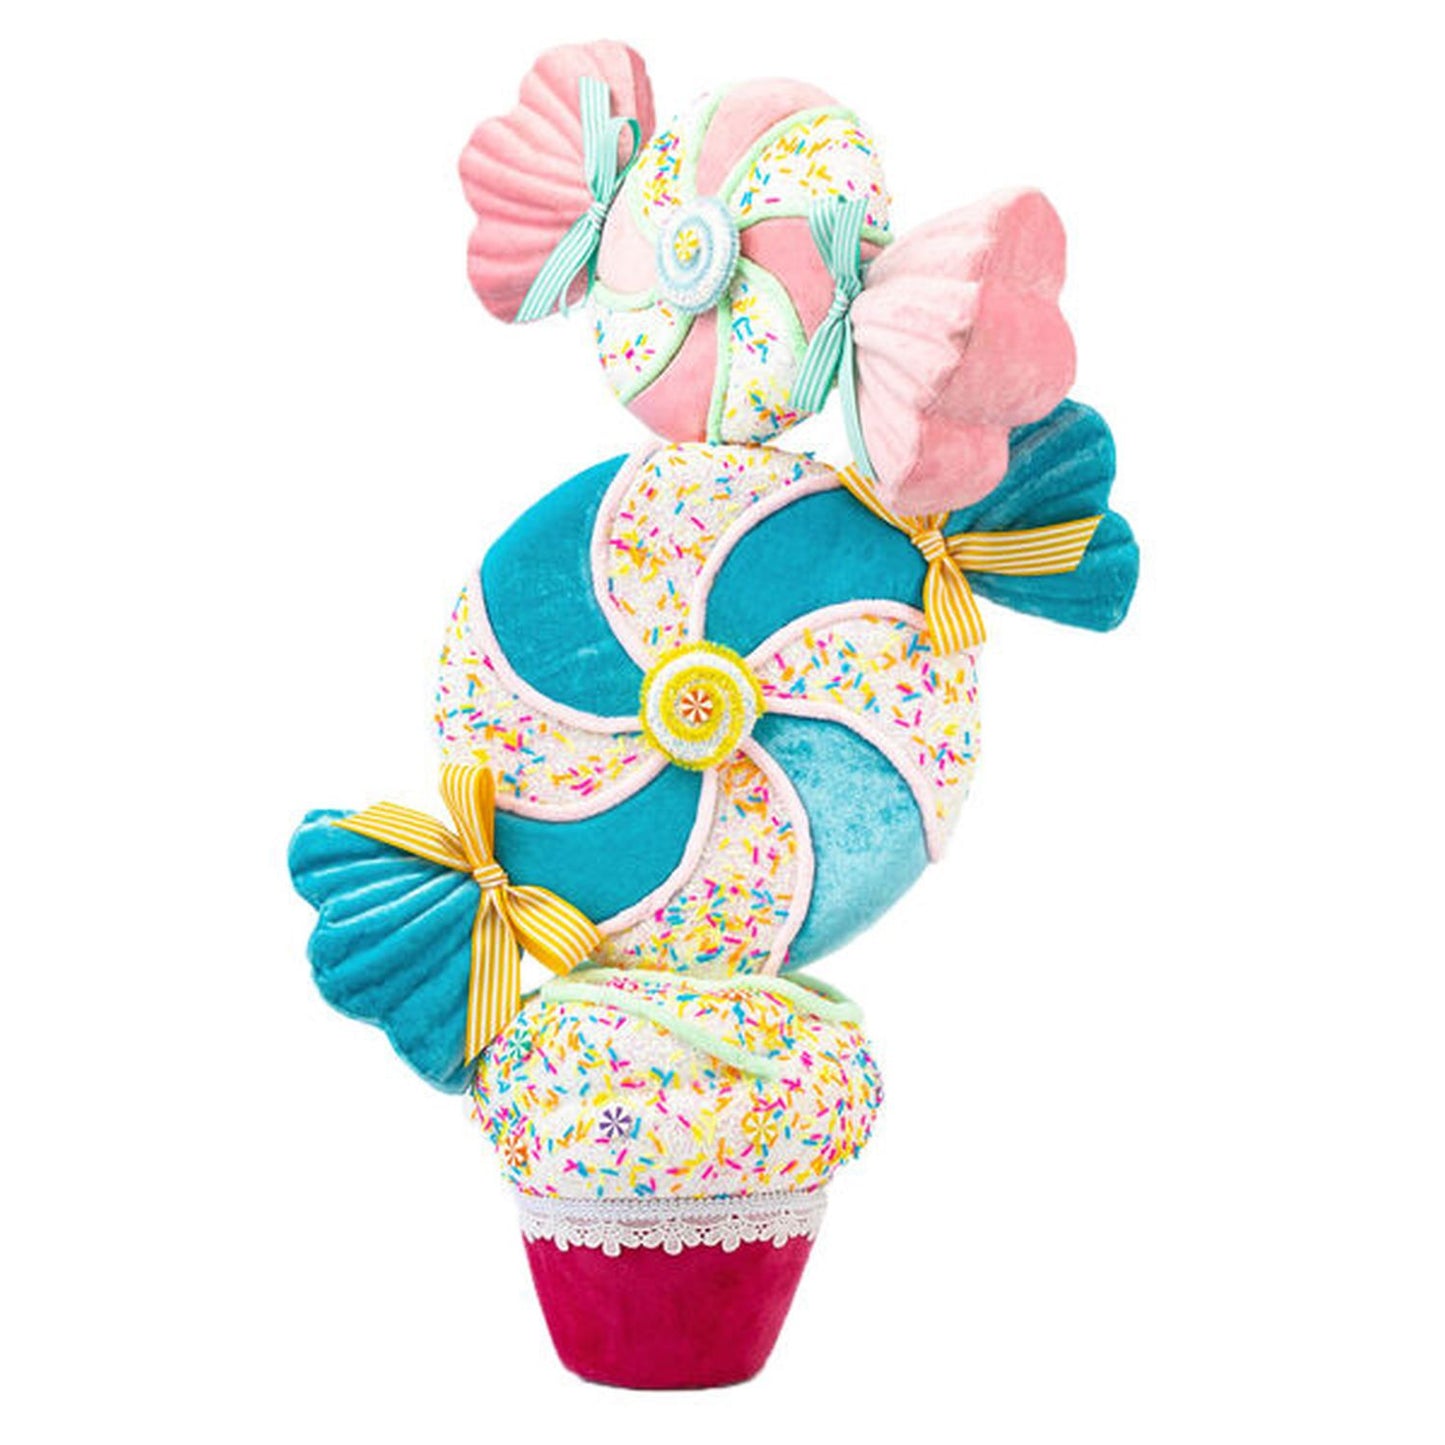 December Diamonds Candy Land 26" Candy Wrapper Cupcake Tree Figurine